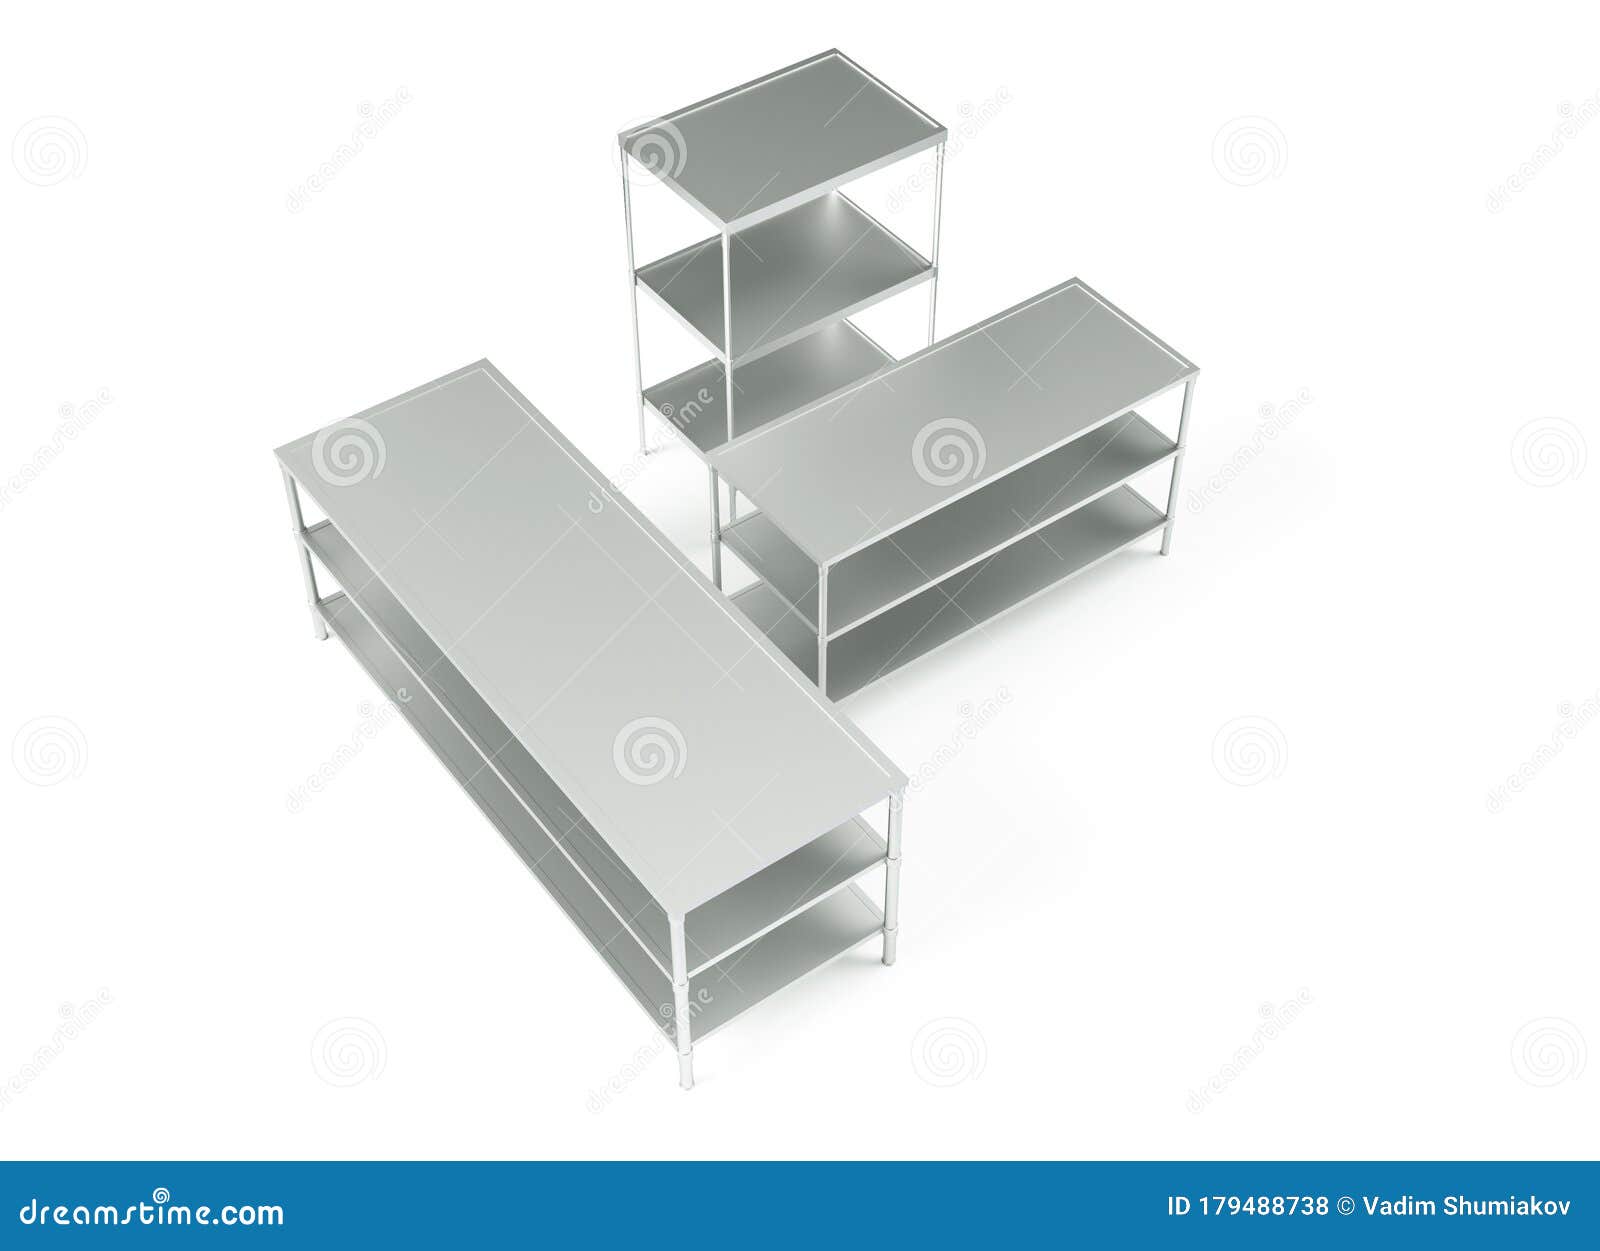 3d rendering of empty metal rack shelves  on white background. industrial warehouses. packaging and storage. digital art